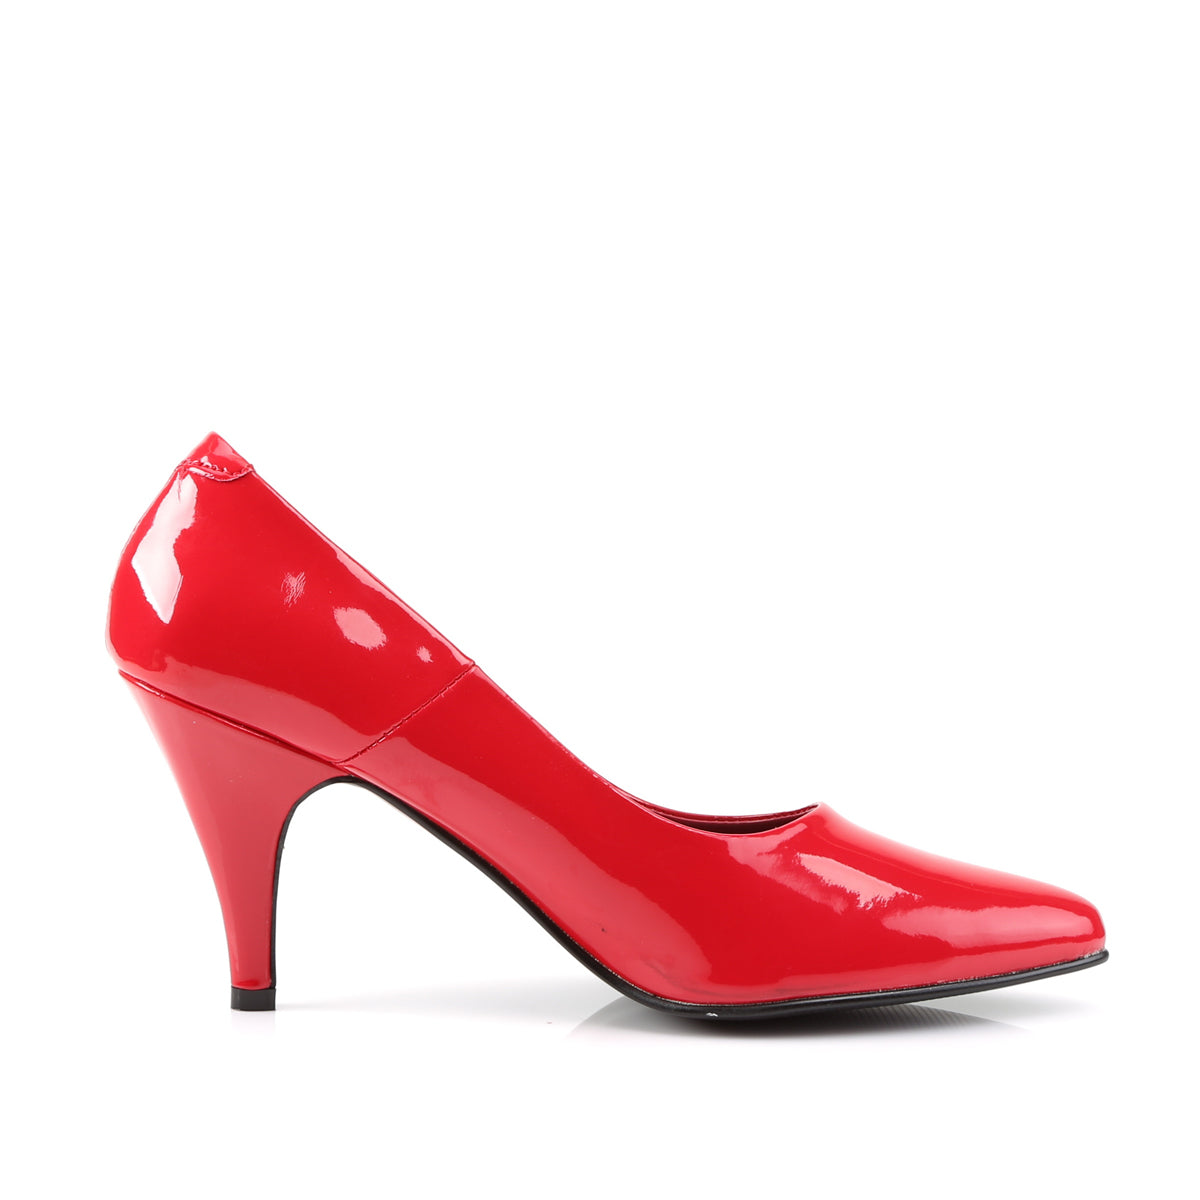 PUMP-420 Fancy Dress Costume Funtasma Women's Shoes Red Pat